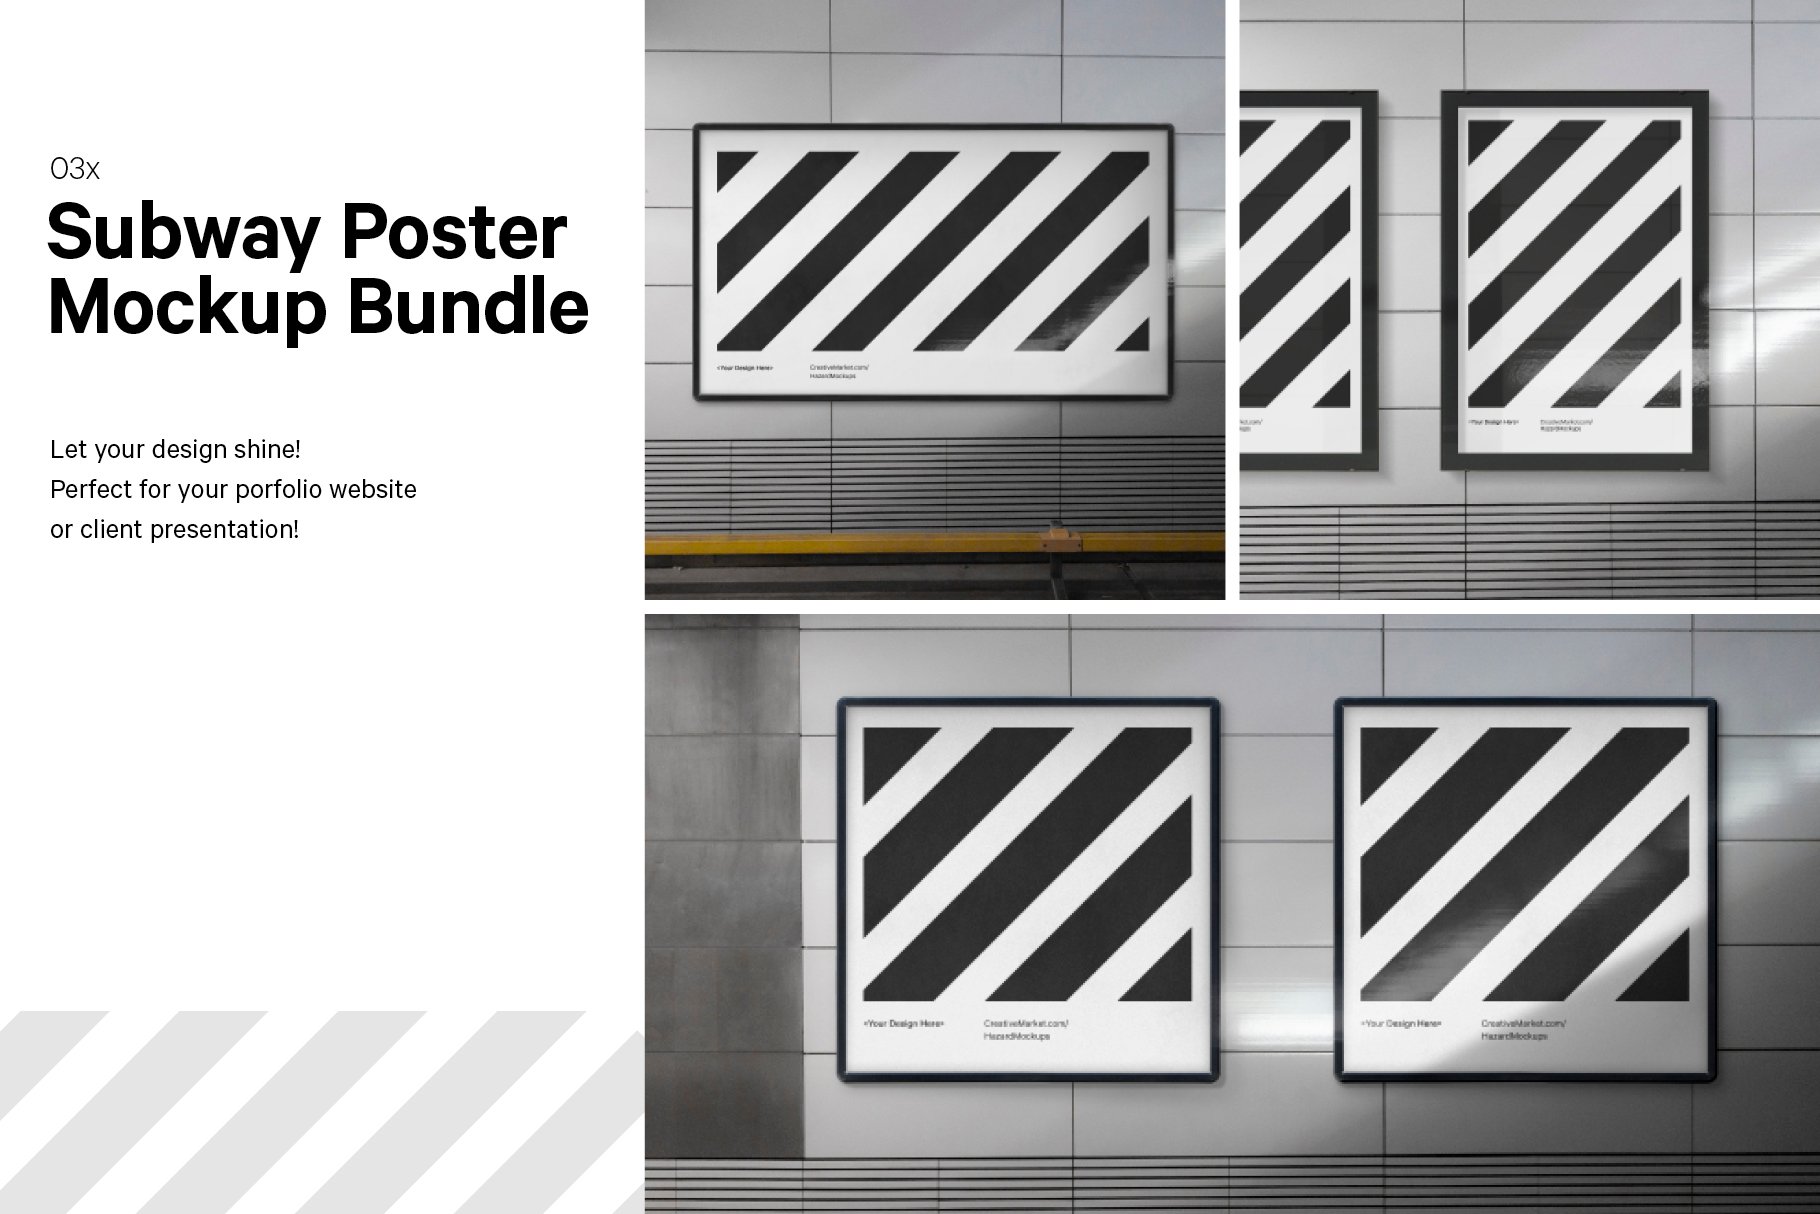 3x Subway poster mockup bundle cover image.